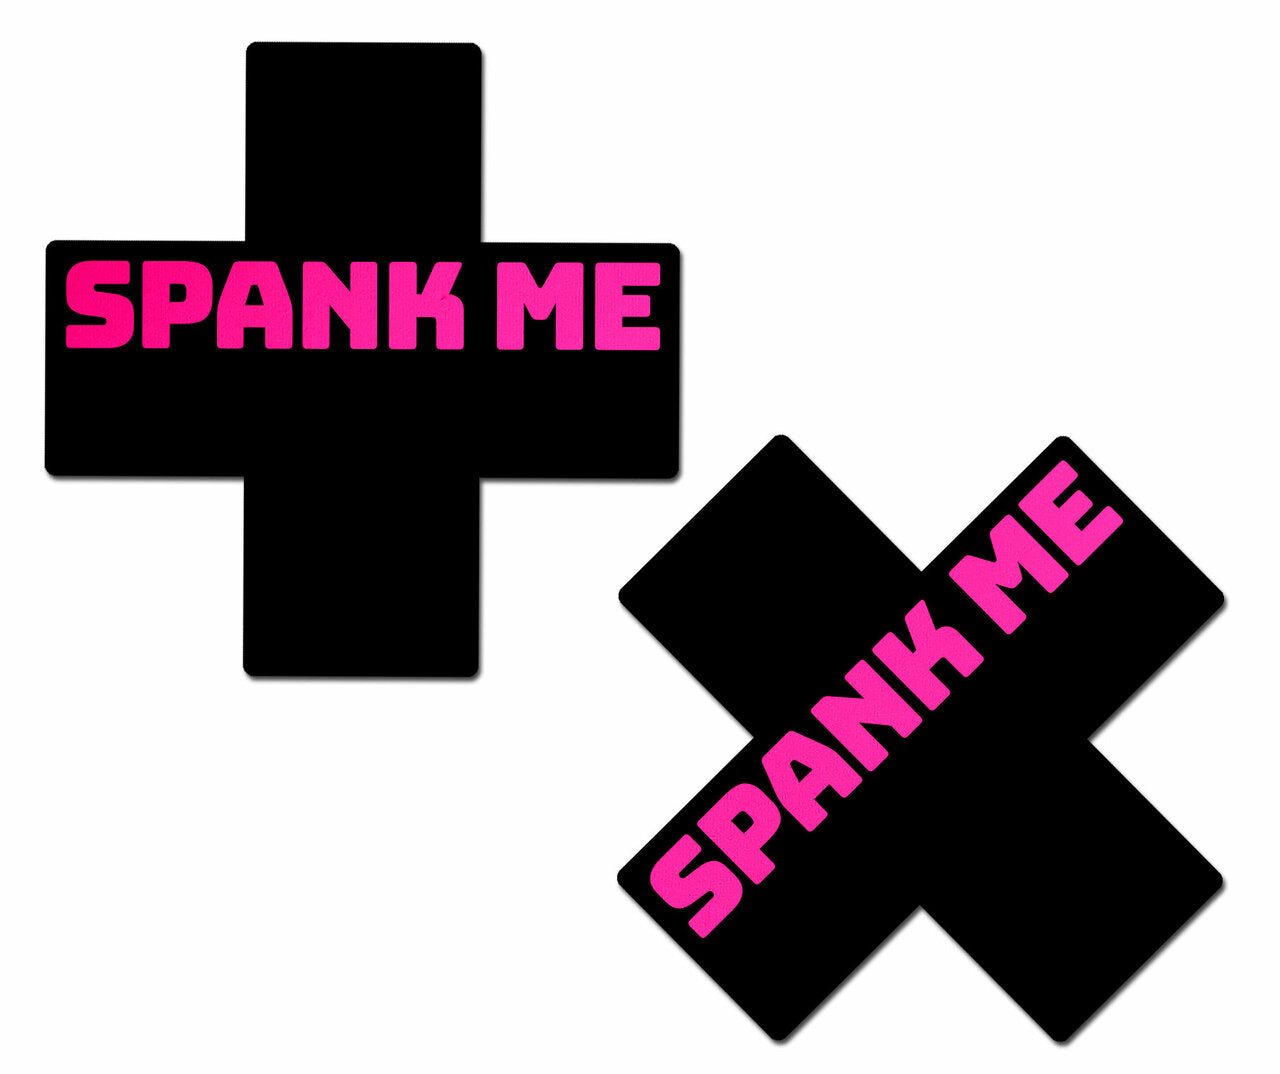 Plus X: 'Spank Me' Black Cross on Neon Pink